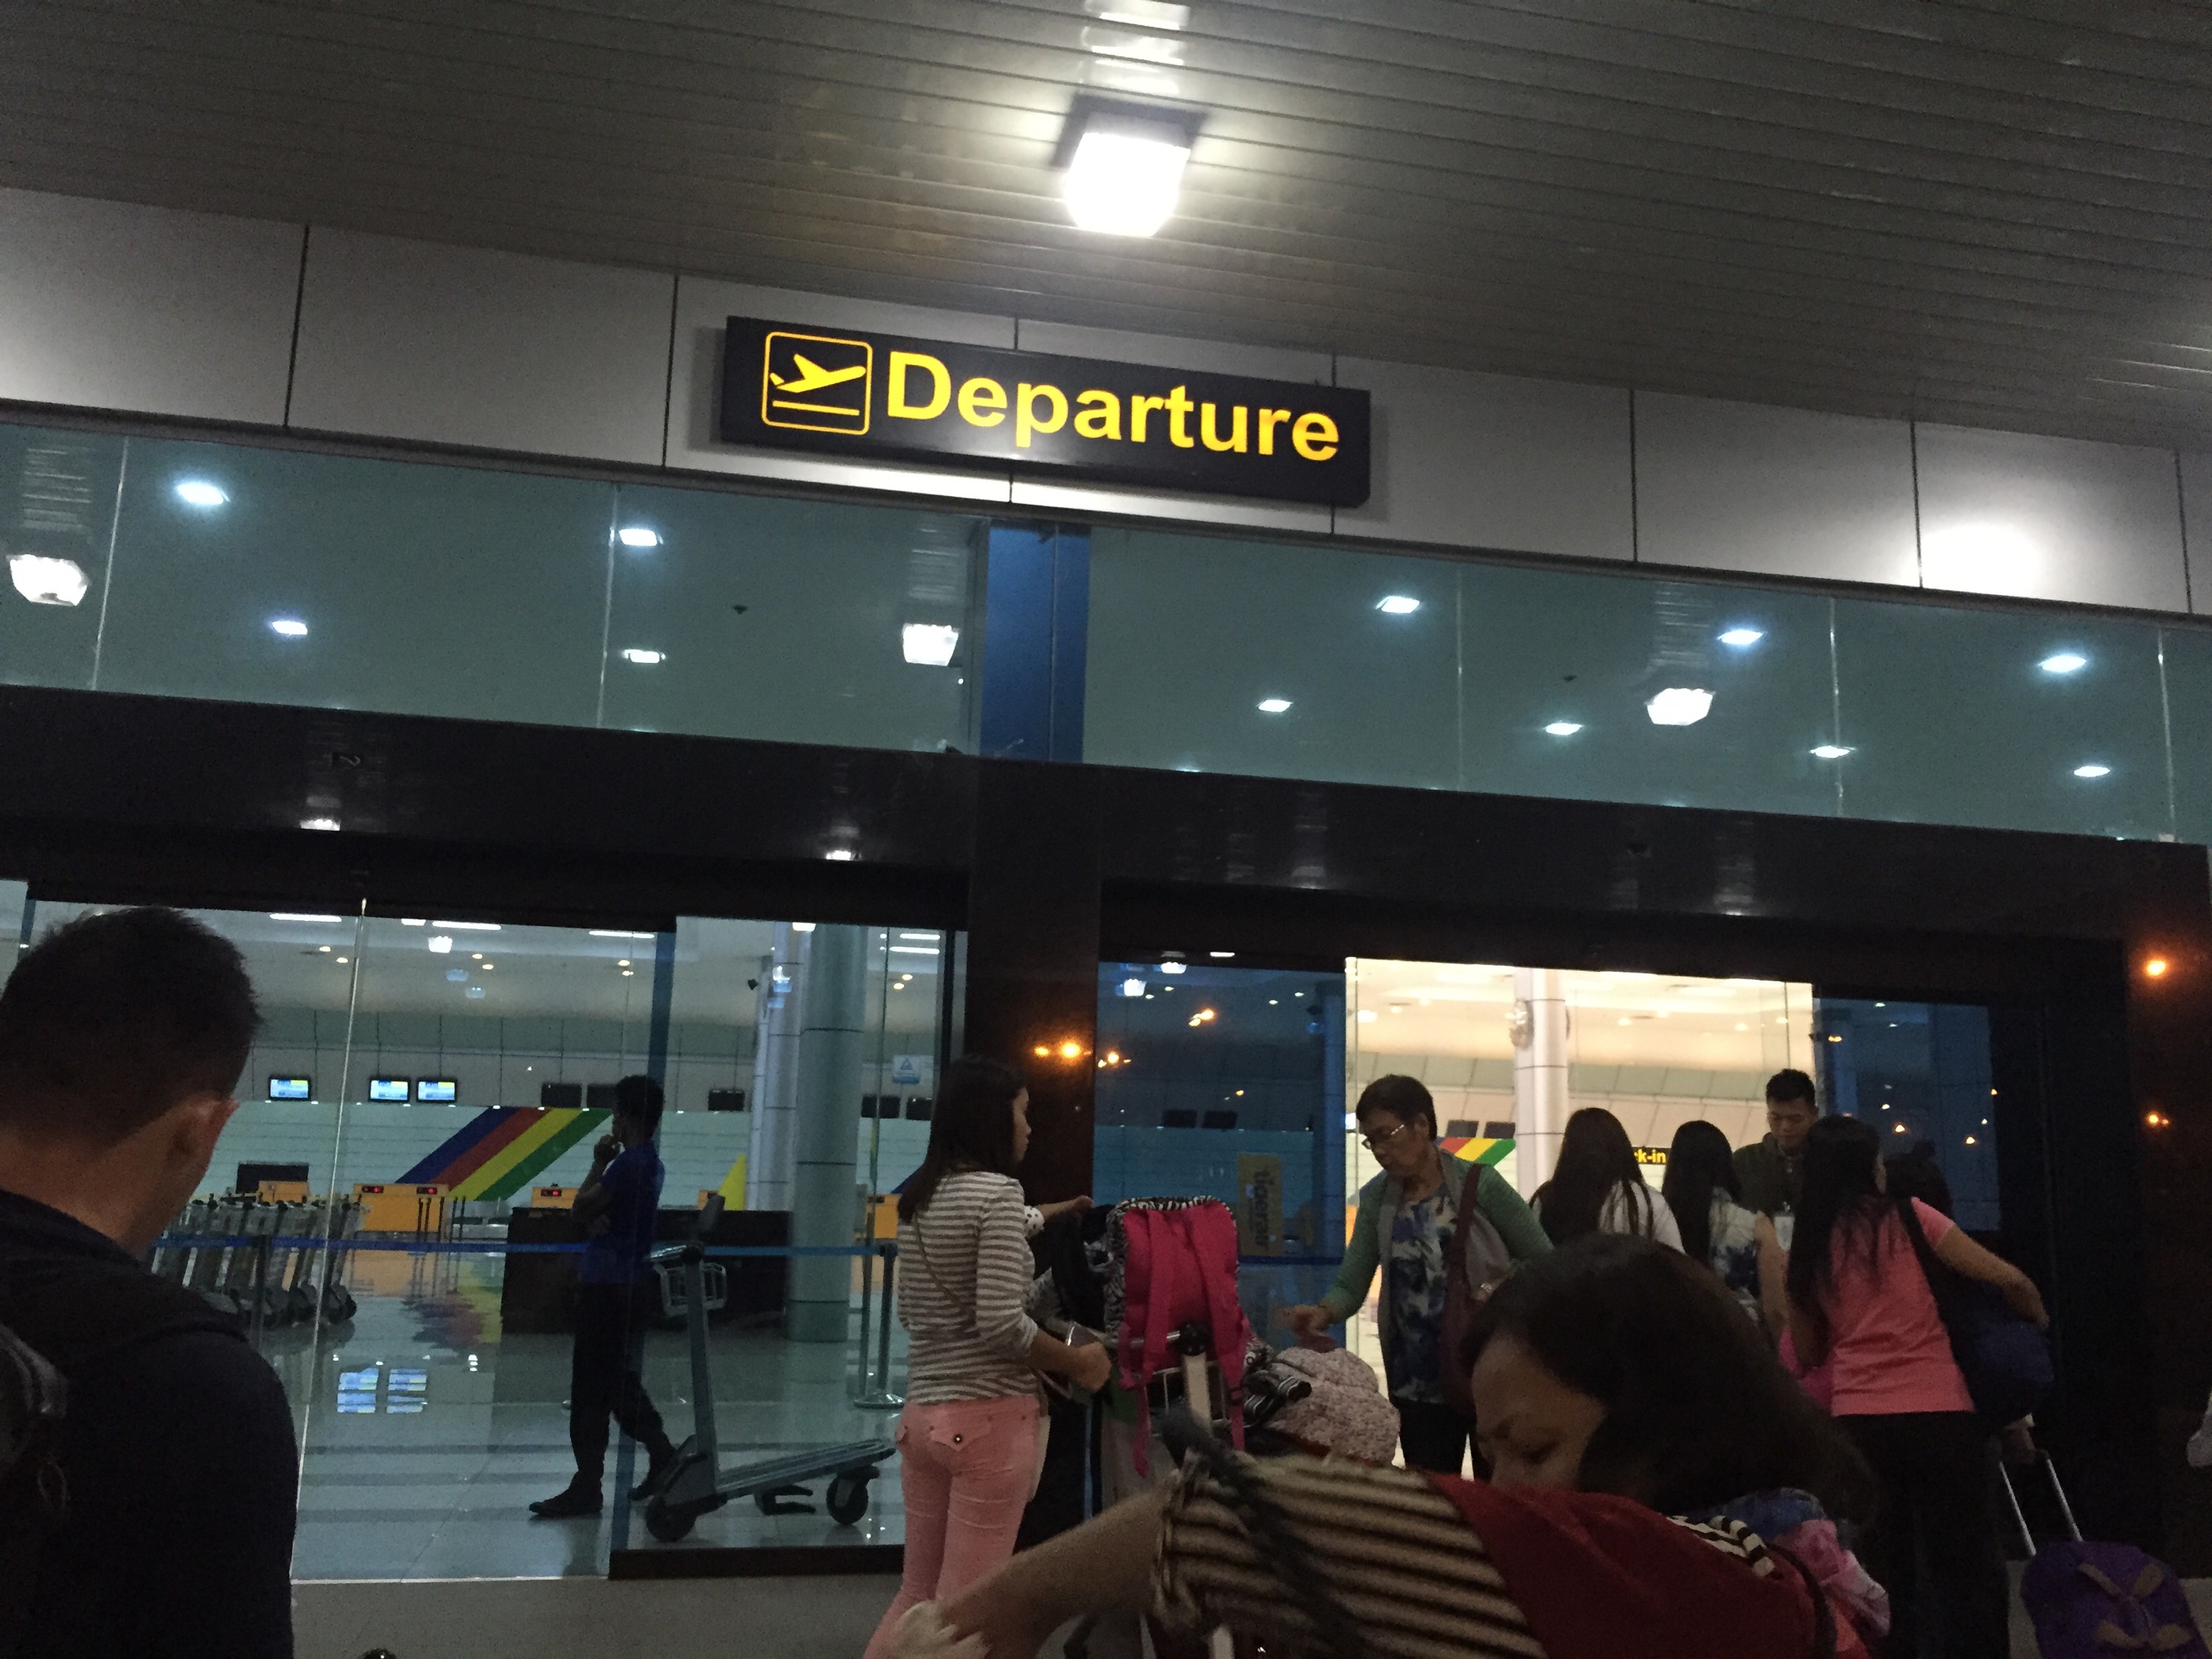 clark international airport departure